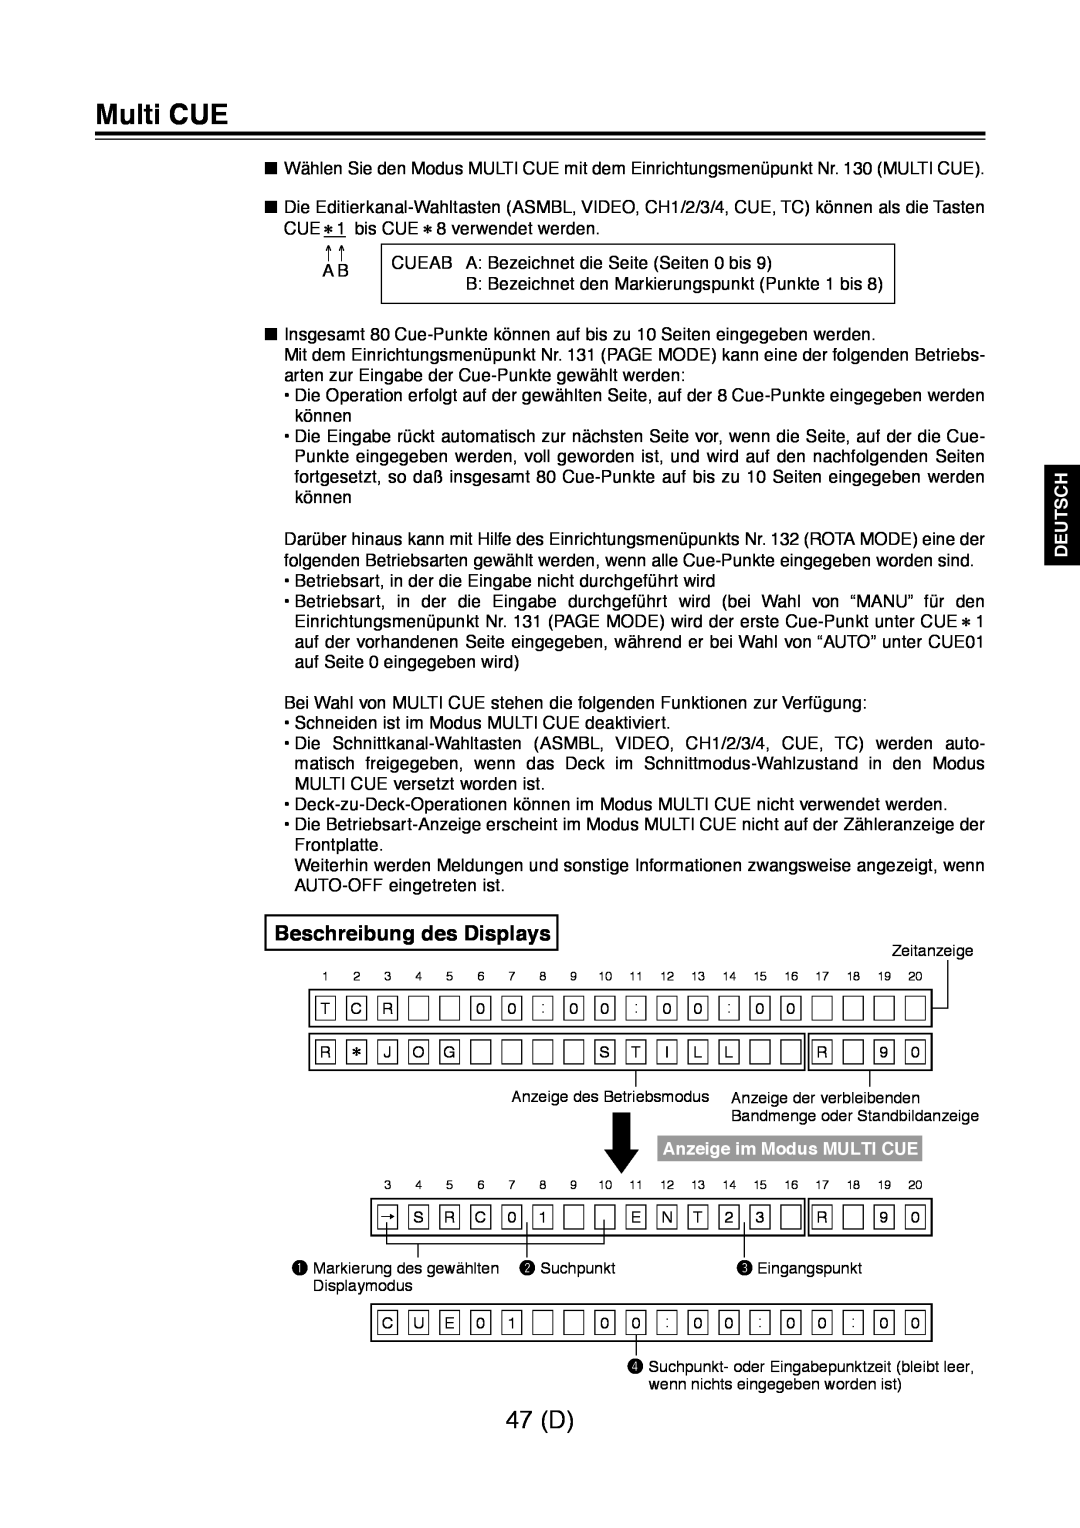 Panasonic AJ-D960 operating instructions Multi CUE, 47 D, Beschreibung des Displays, Deutsch 